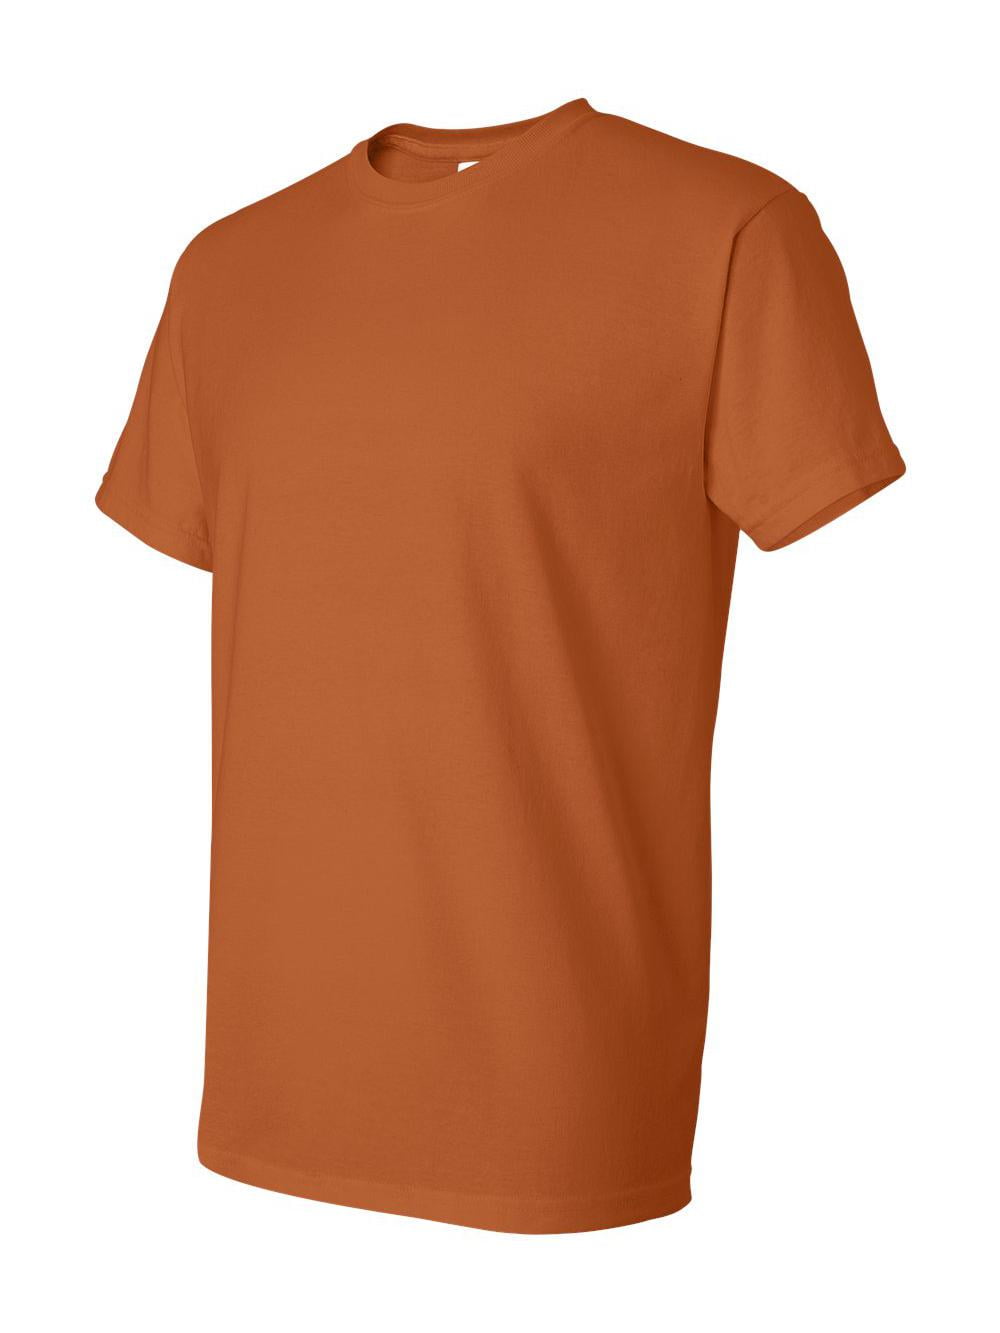 Gildan - DryBlend T-Shirt - 8000 - Texas Orange - Size: S - Walmart